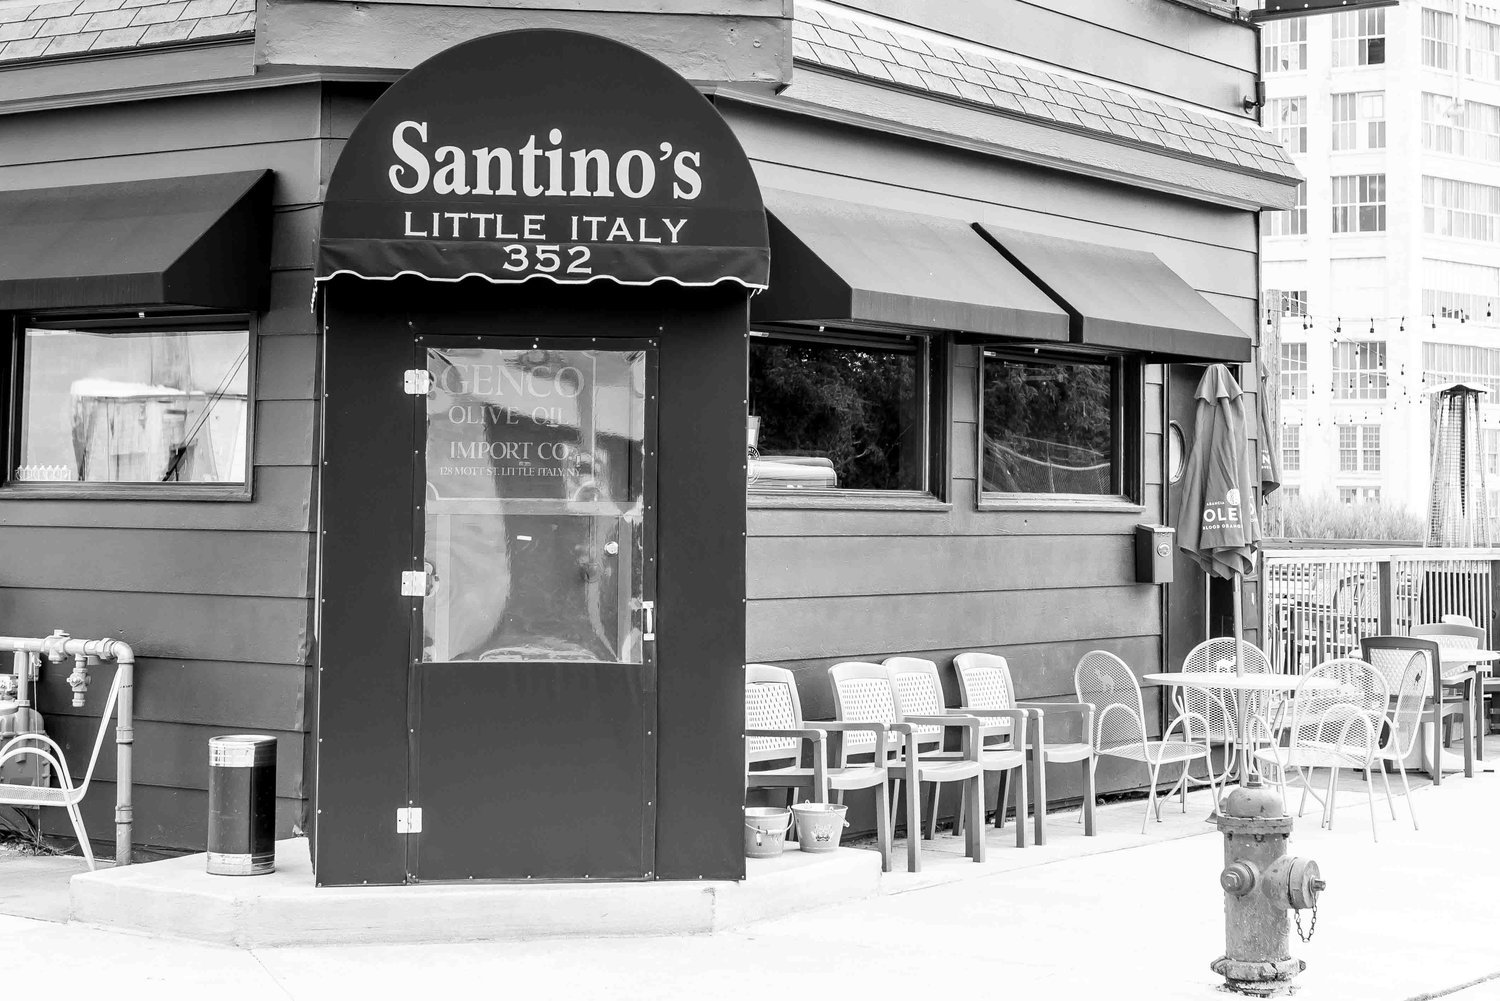 Santino's Little Italy